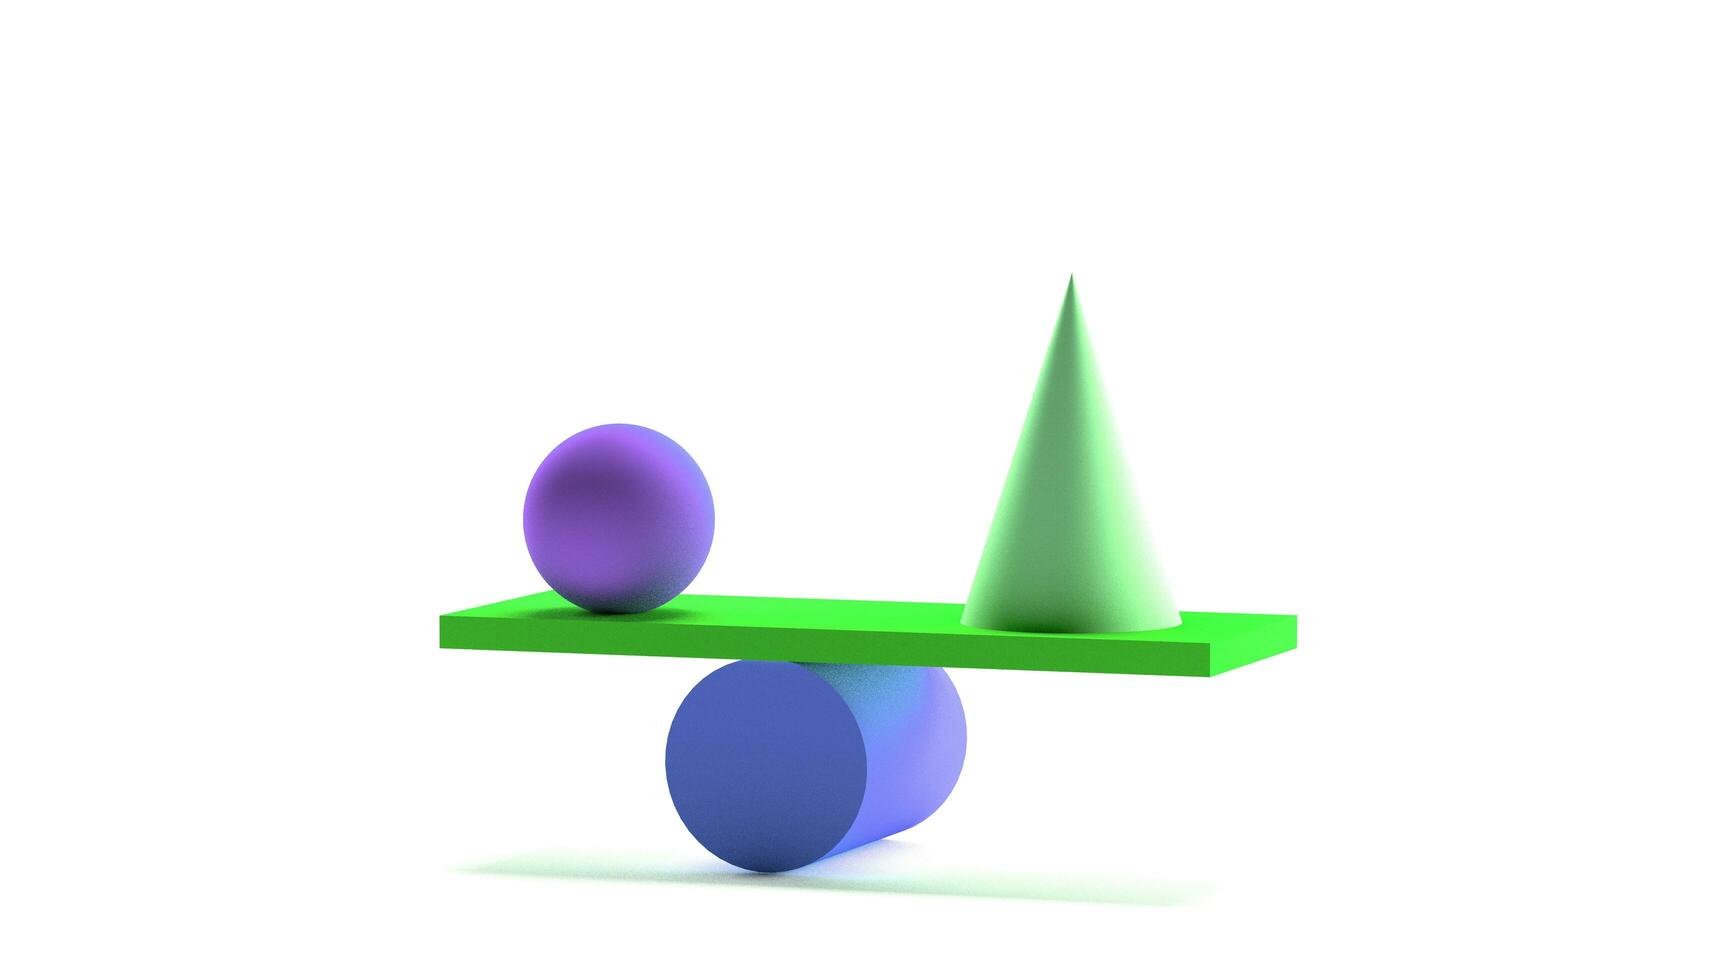 balans geometrisk former på en vit bakgrund foto